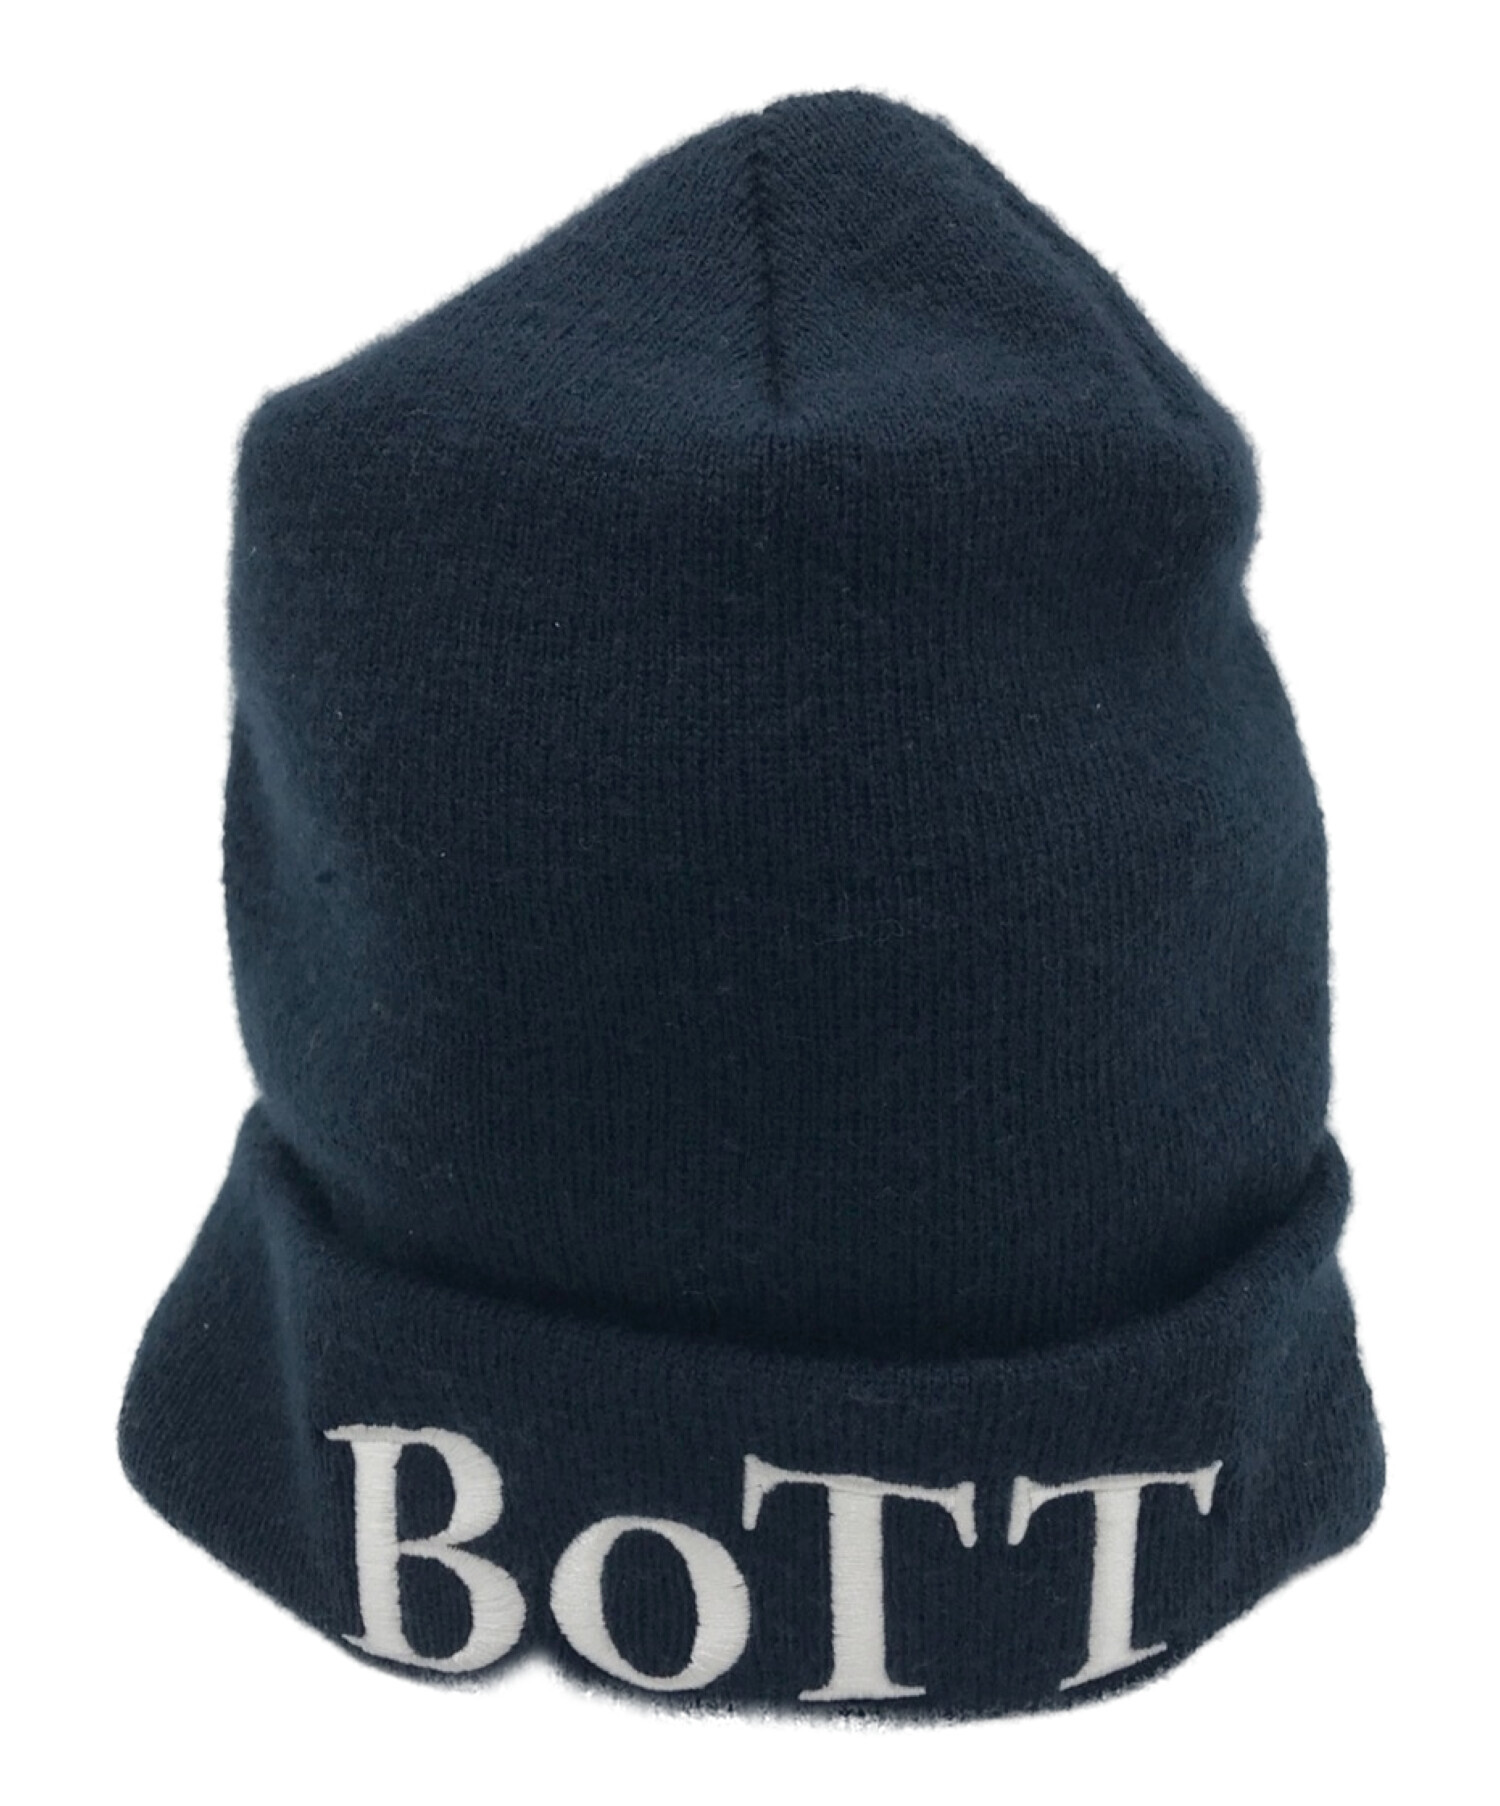 BoTT NEW ERA ボット ニューエラ ビーニー ニット帽 帽子-